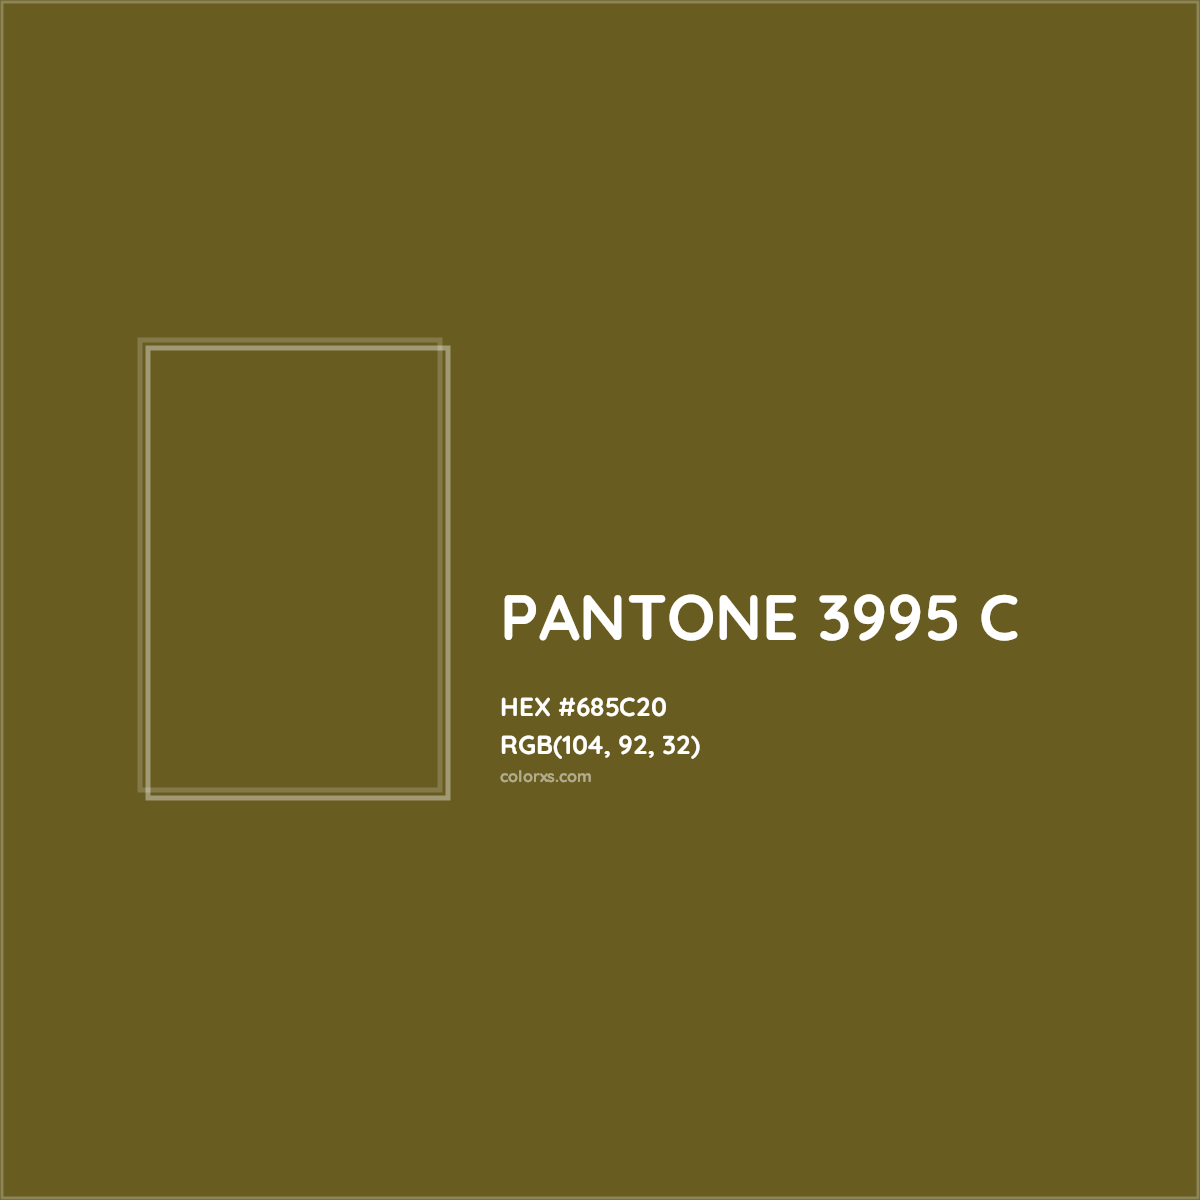 HEX #685C20 PANTONE 3995 C CMS Pantone PMS - Color Code